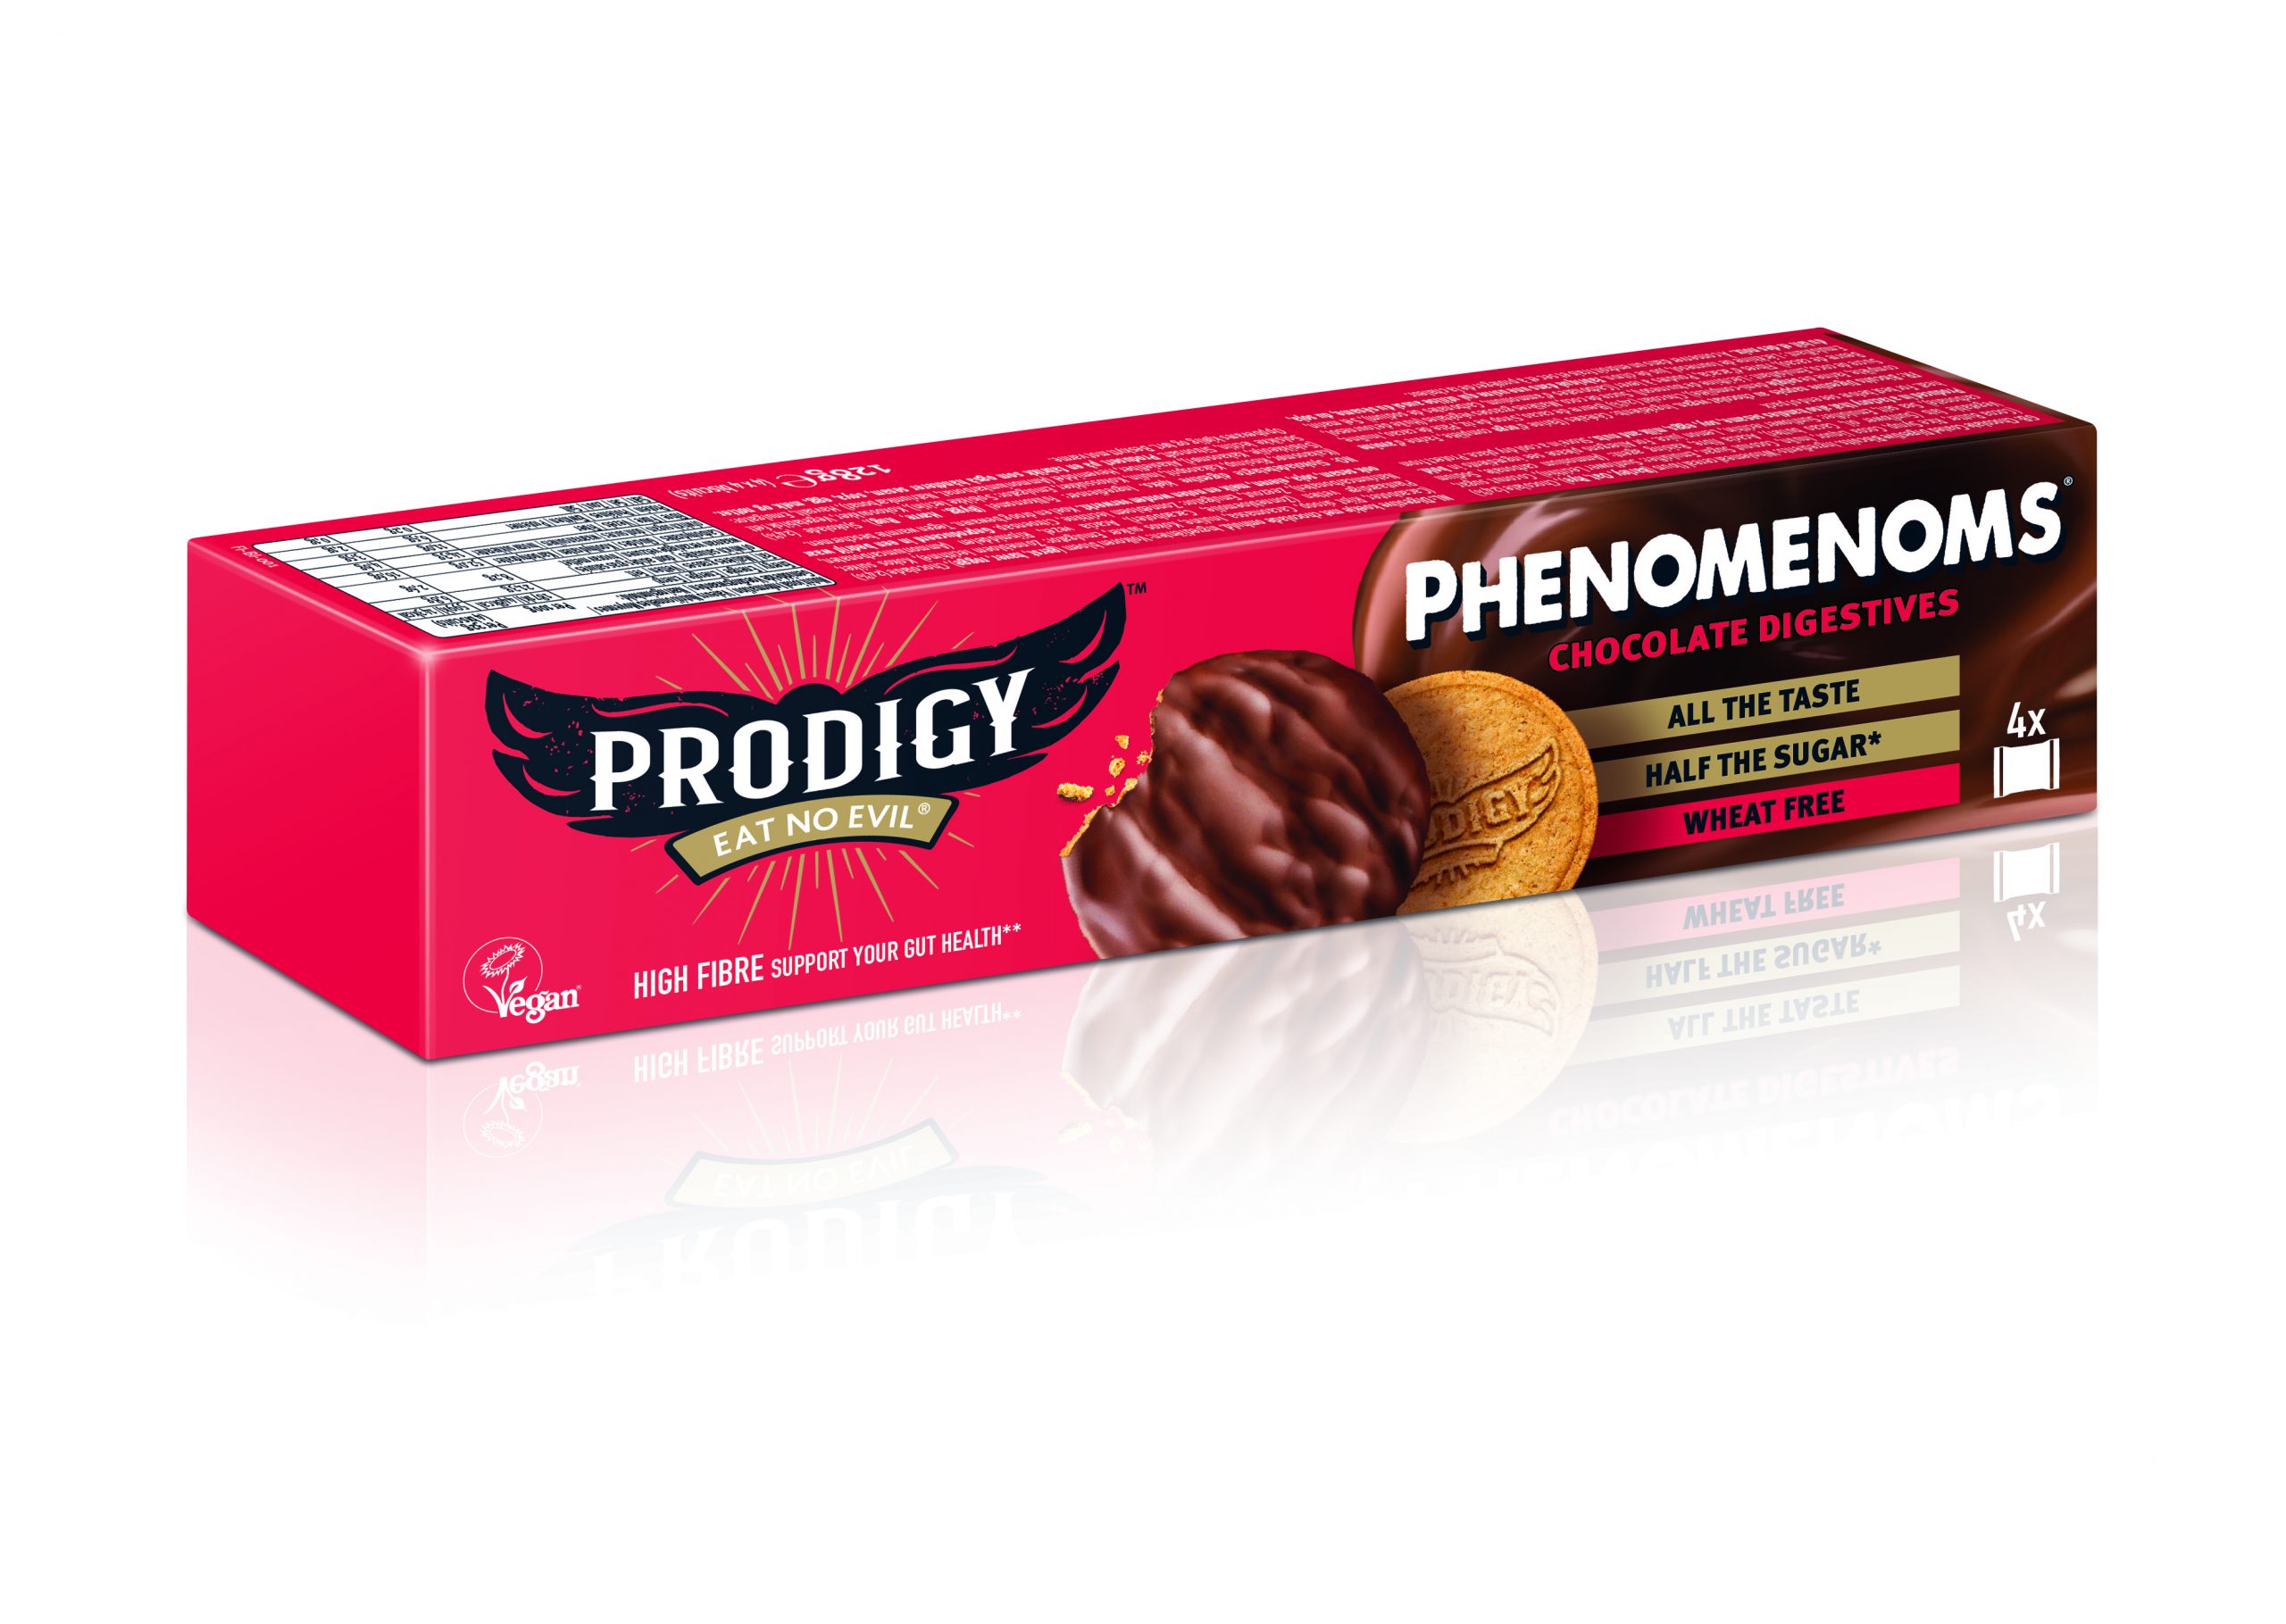 Prodigy launches ‘Phenomenoms’ – new plant-based chocolate biscuit range